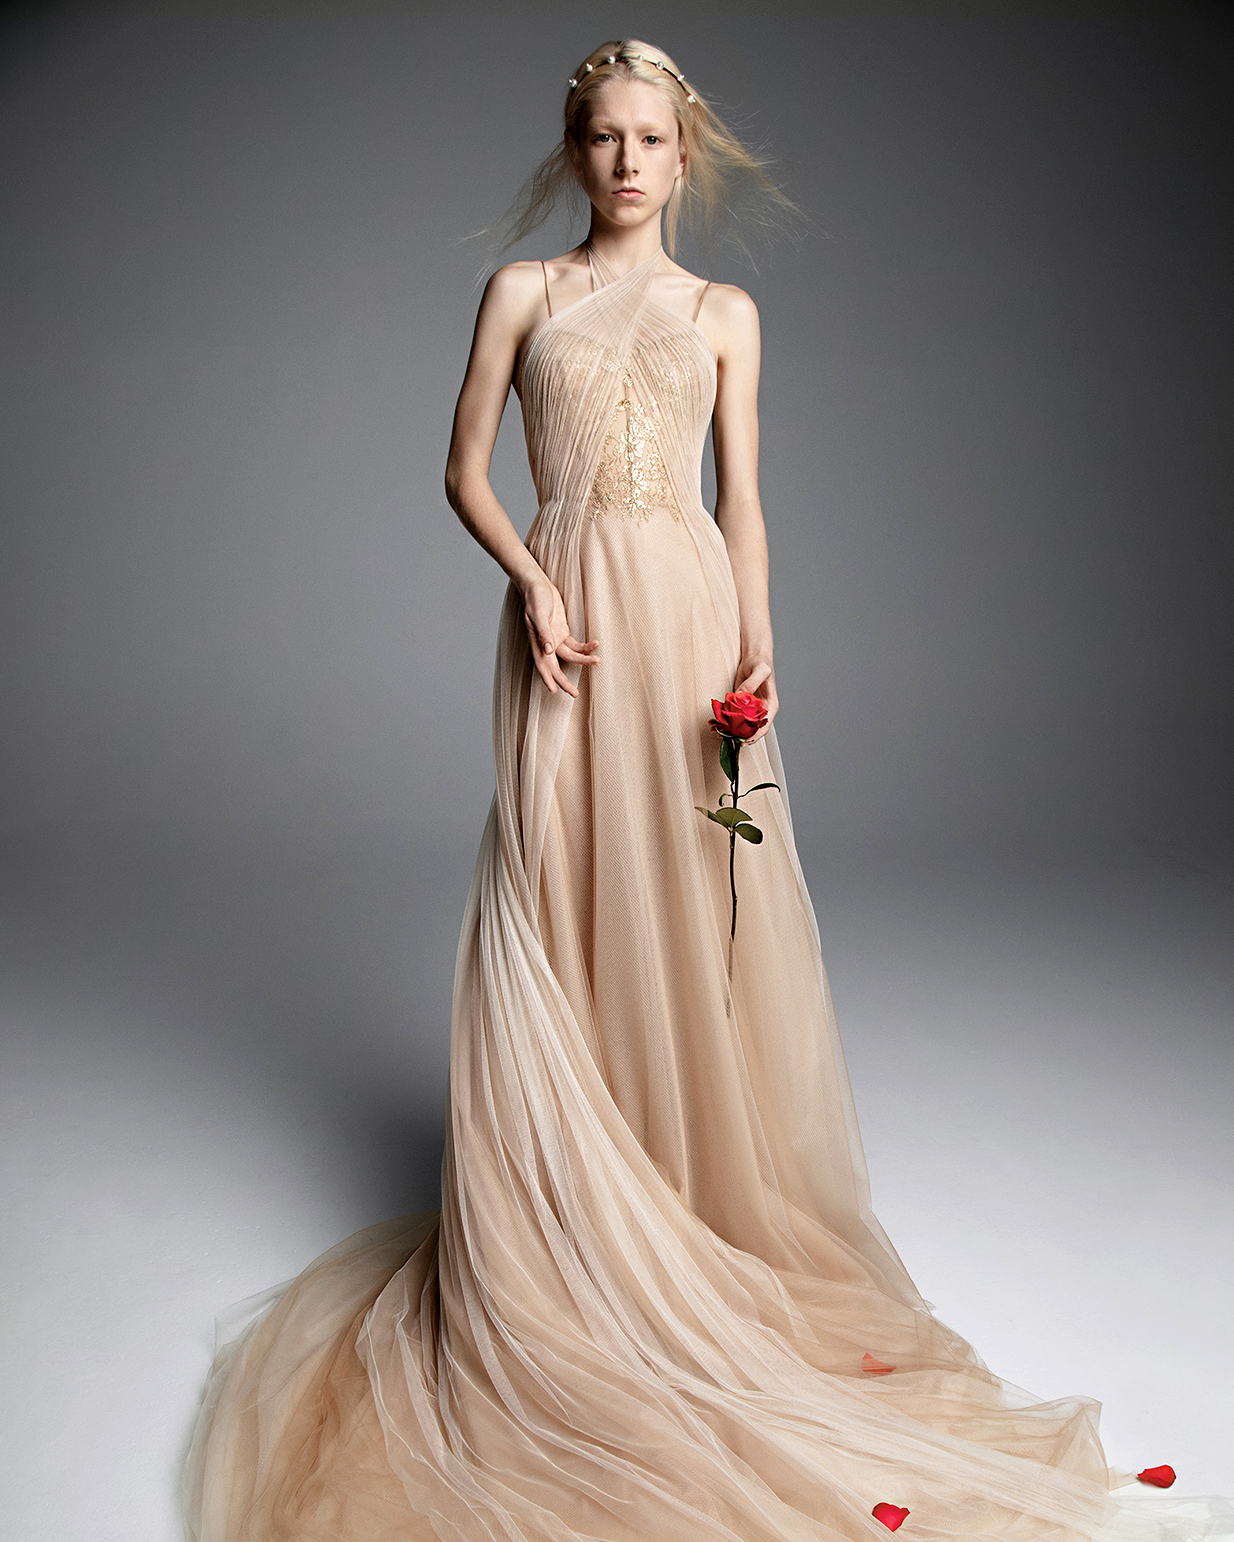 Vera Wang Fall 2019 Wedding Dress Collection | Martha ...